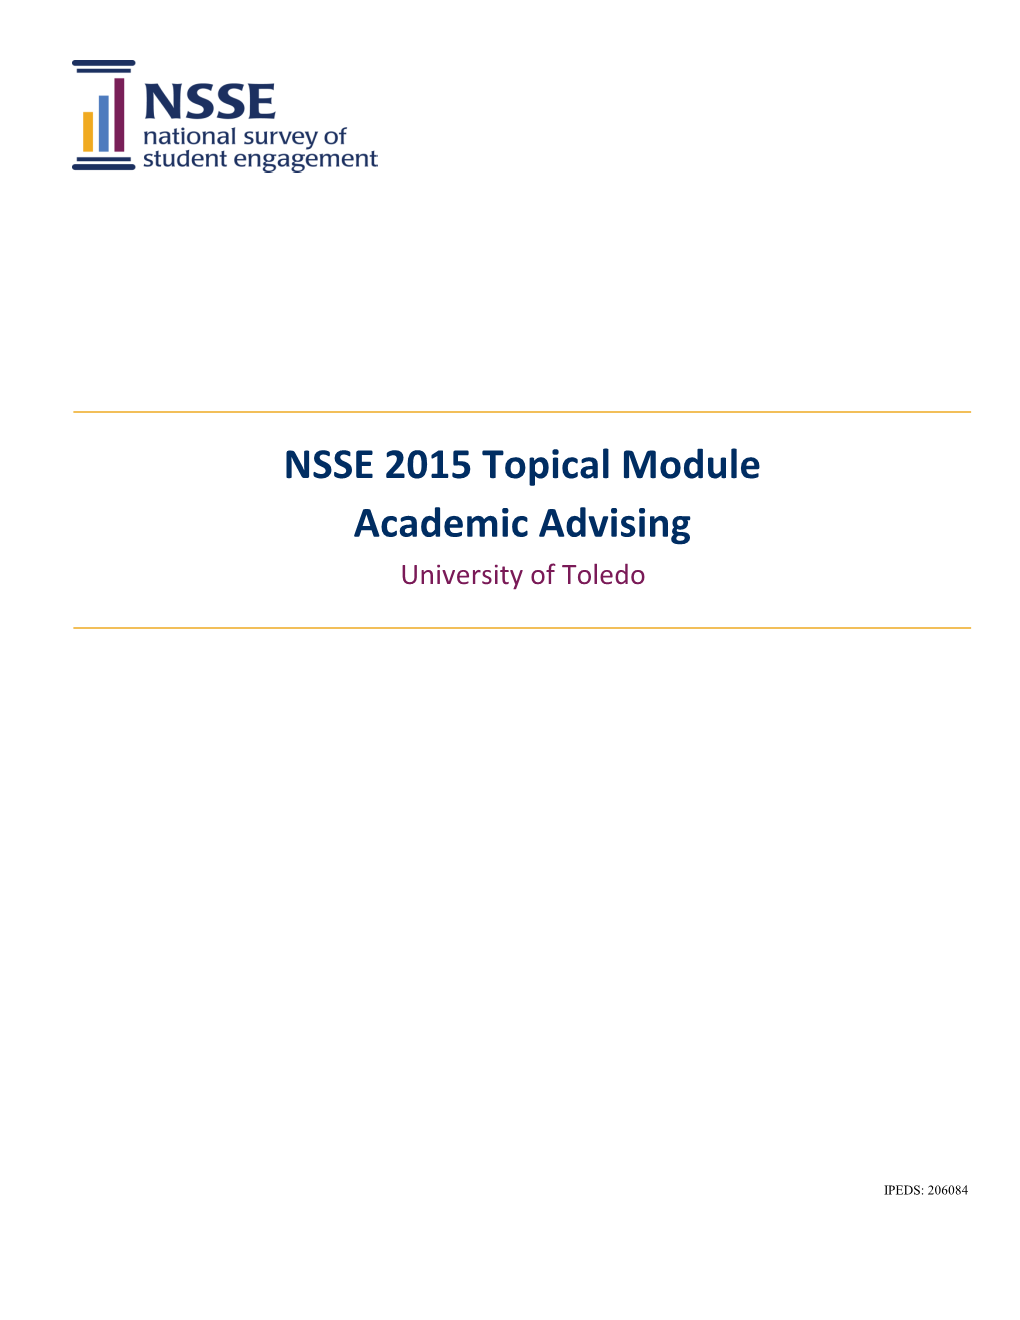 NSSE 2015 Topical Module Academic Advising University of Toledo